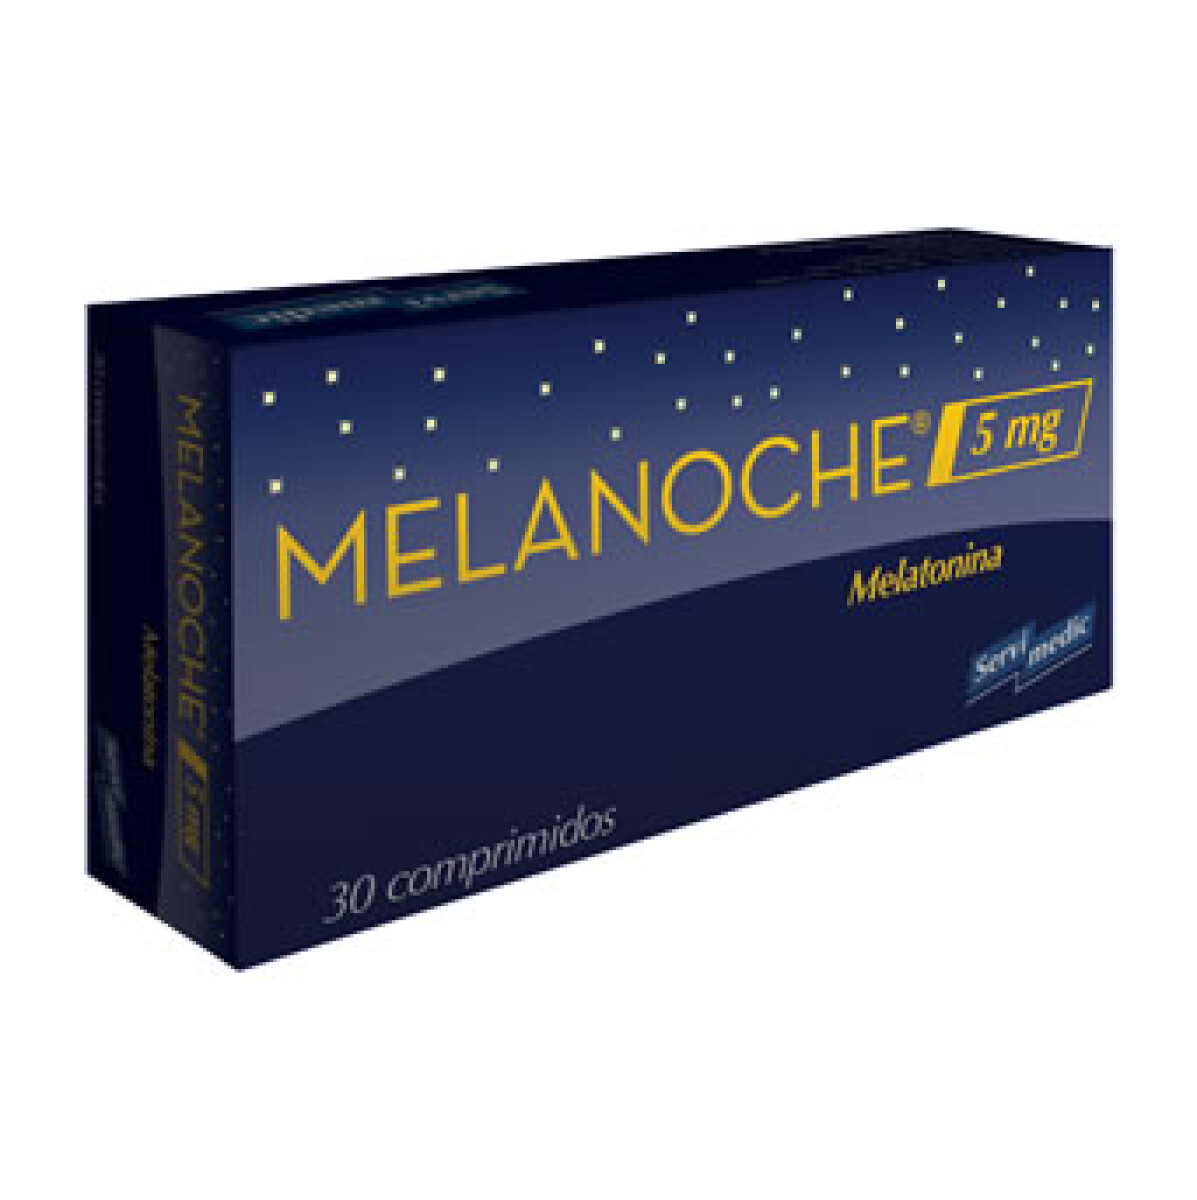 Melanoche 5 Mg. 30 Comp. 